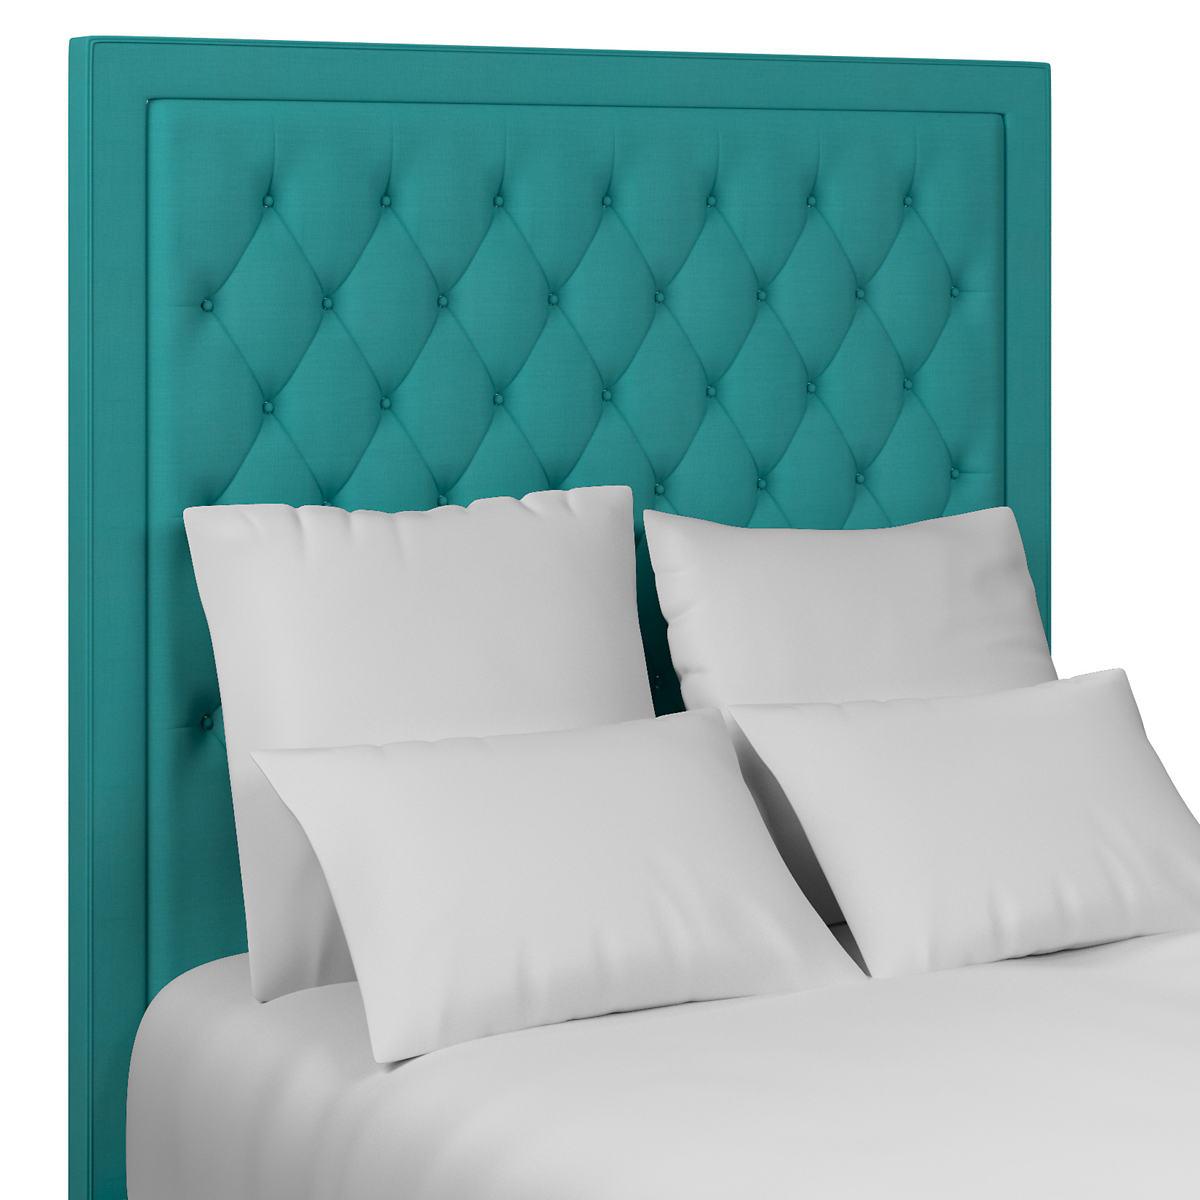 Estate Linen Turquoise Stonington, Teal Tufted Headboard Bedroom